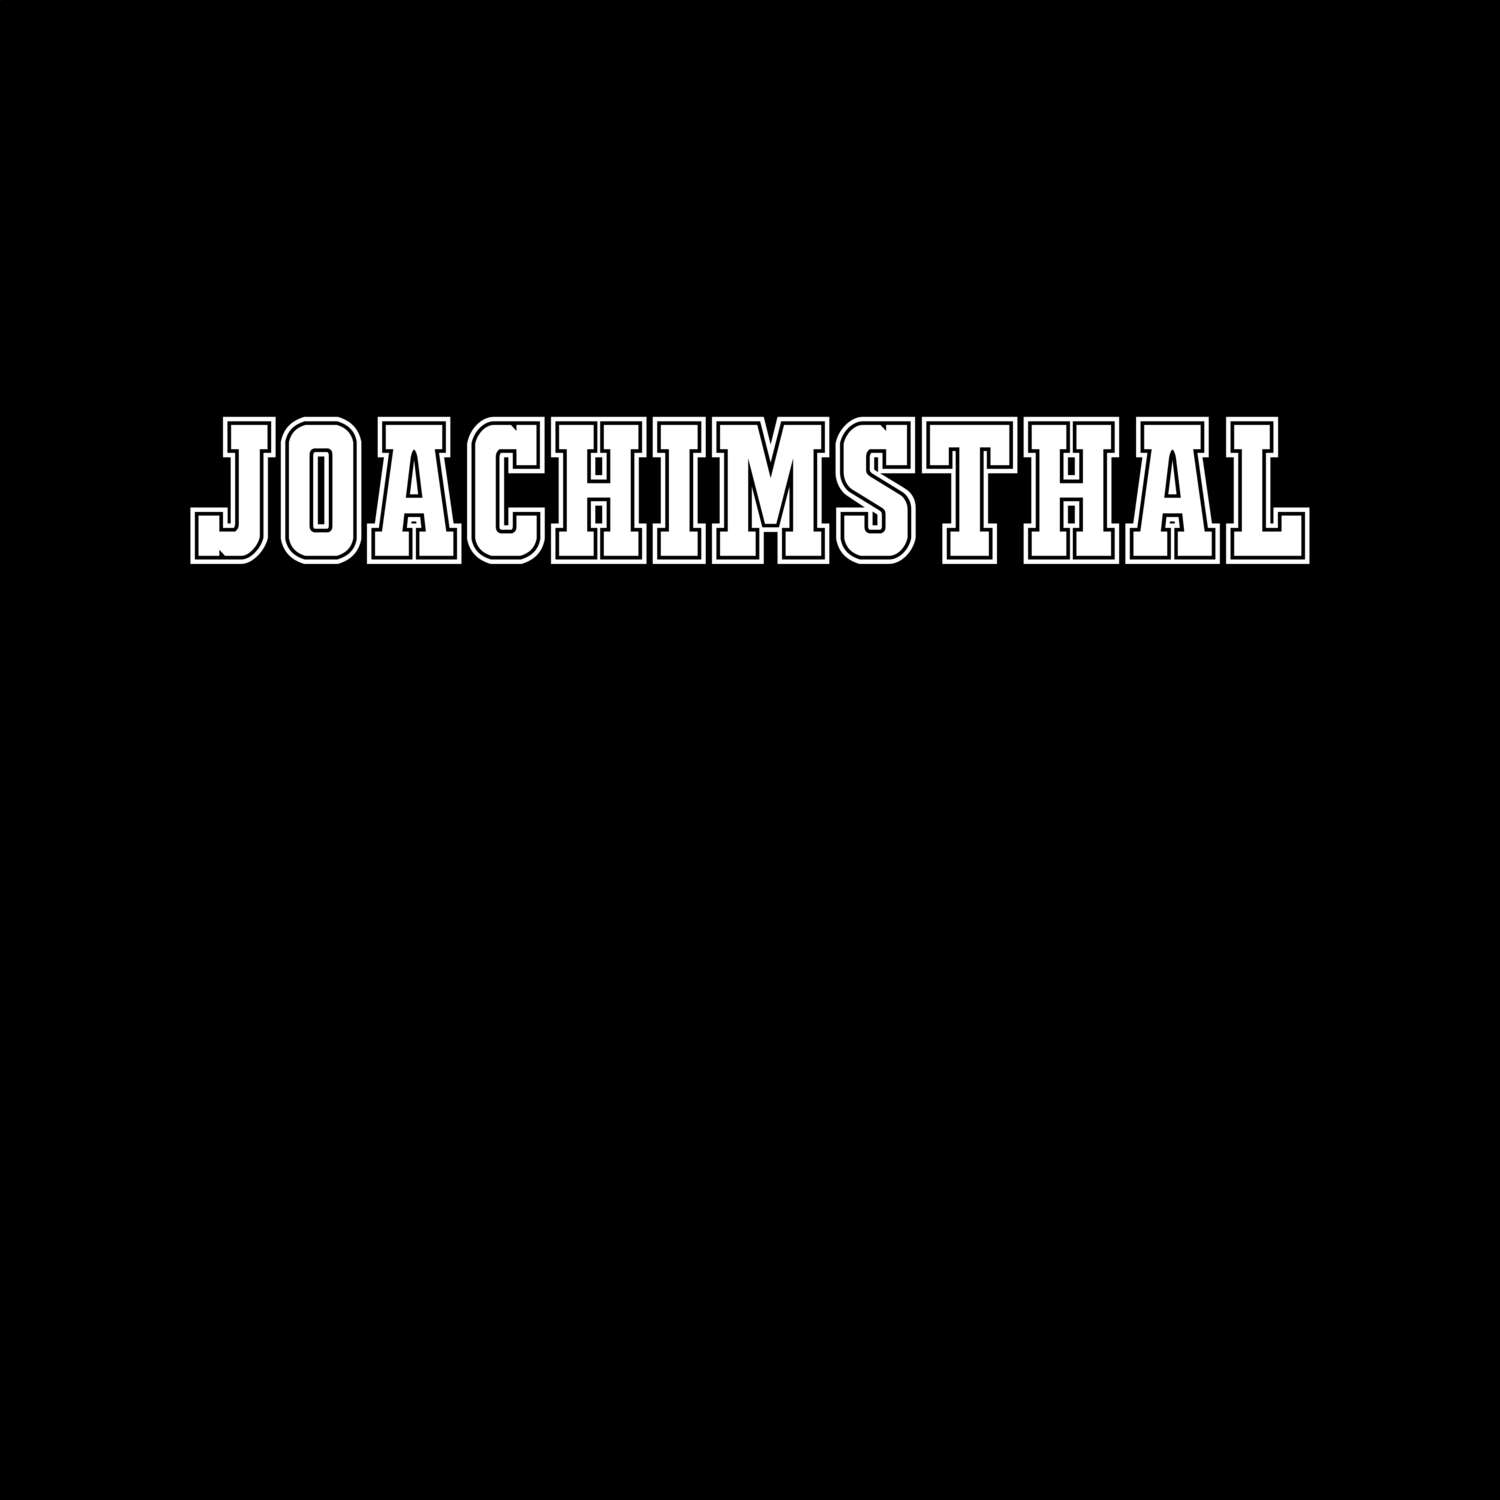 Joachimsthal T-Shirt »Classic«